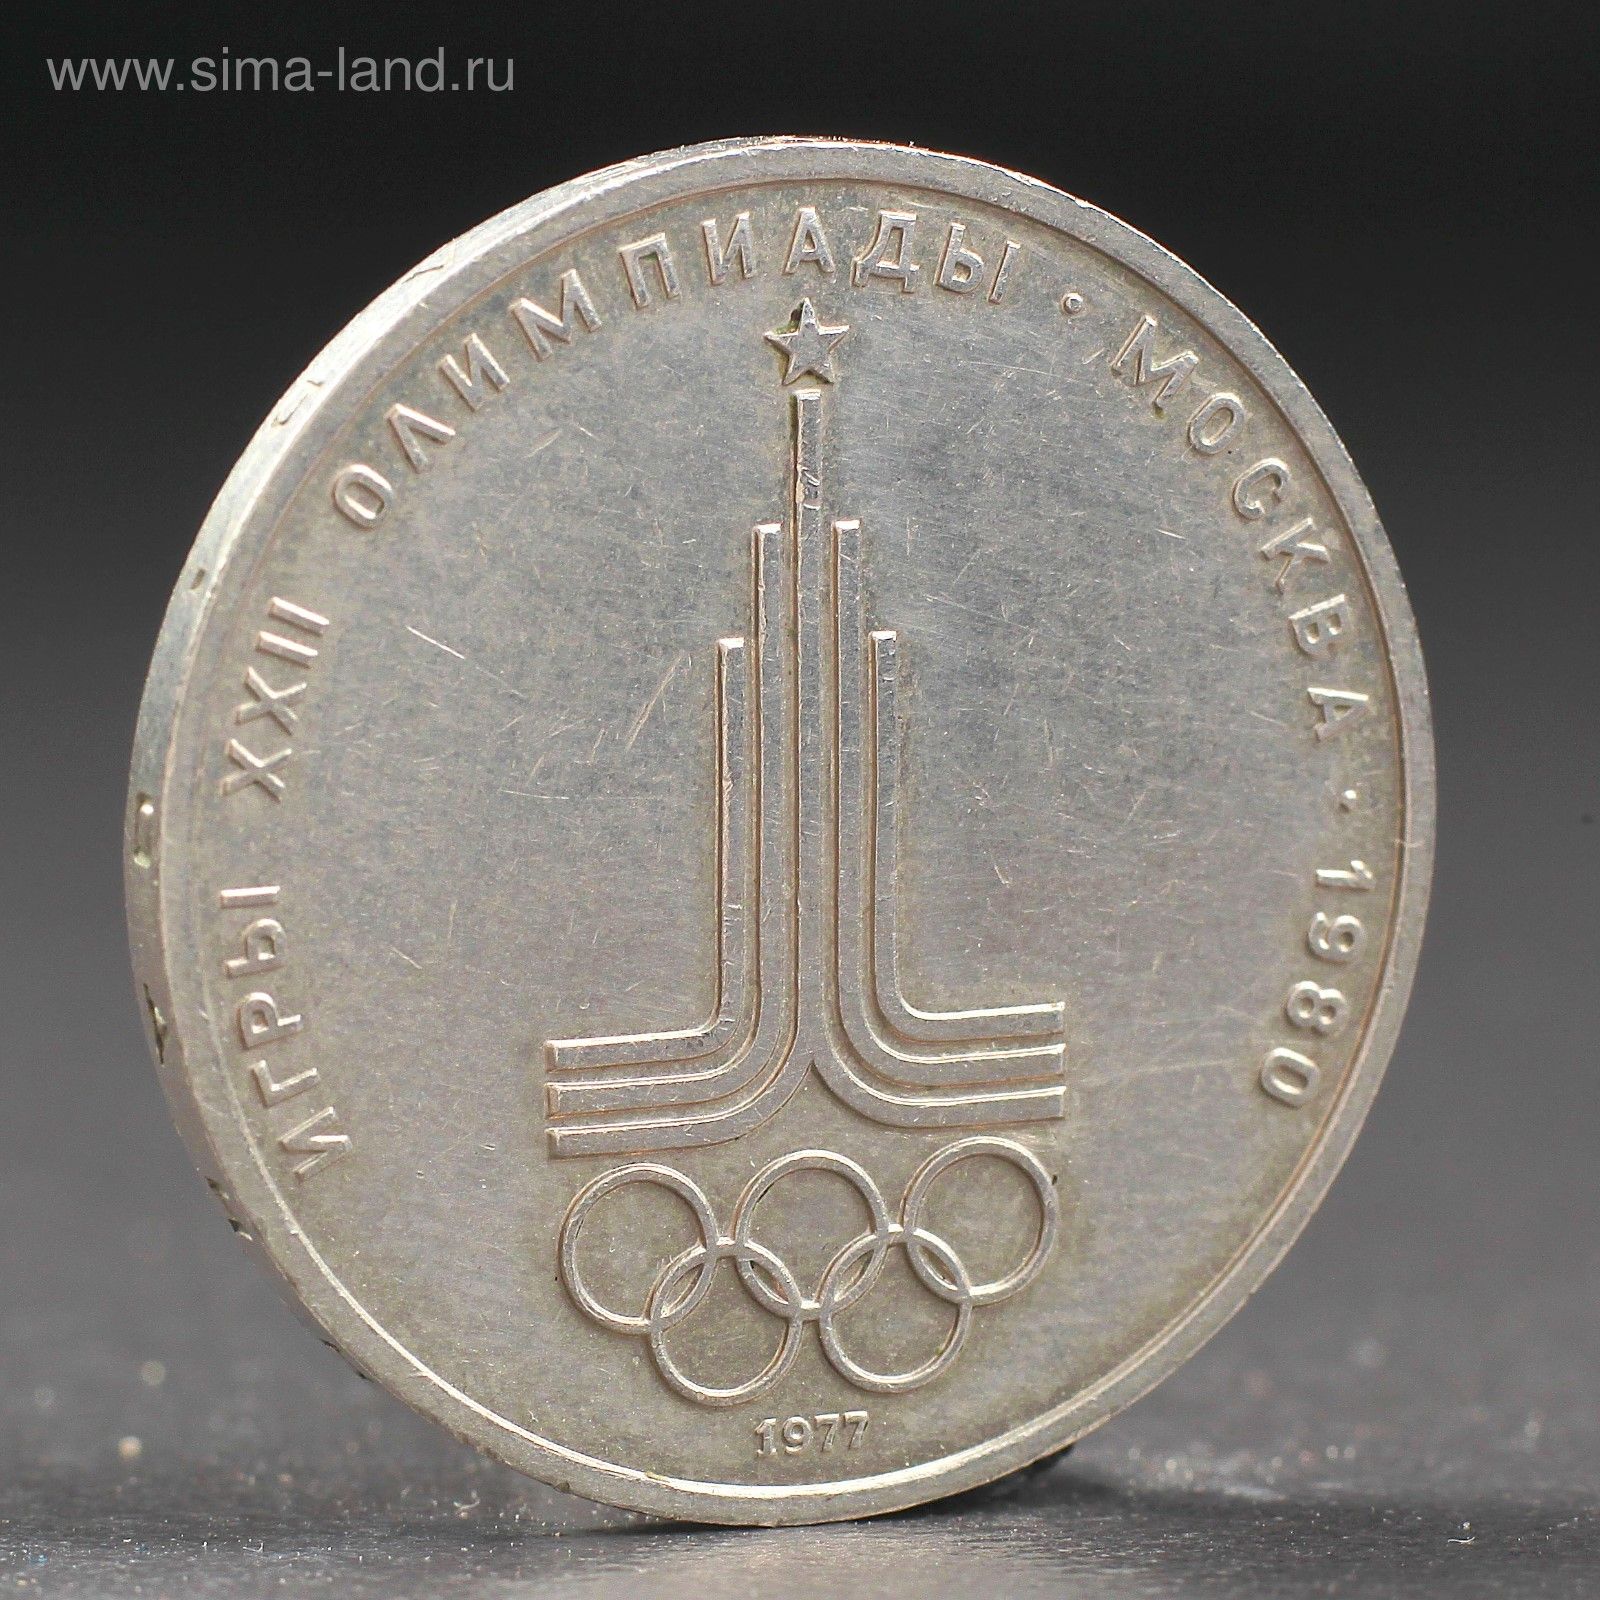 4 80 в рублях. Монета СССР 1 рубль 1980 года Олимпийский. Монета 1 рубль 1977 года. Олимпийский рубль 1977.